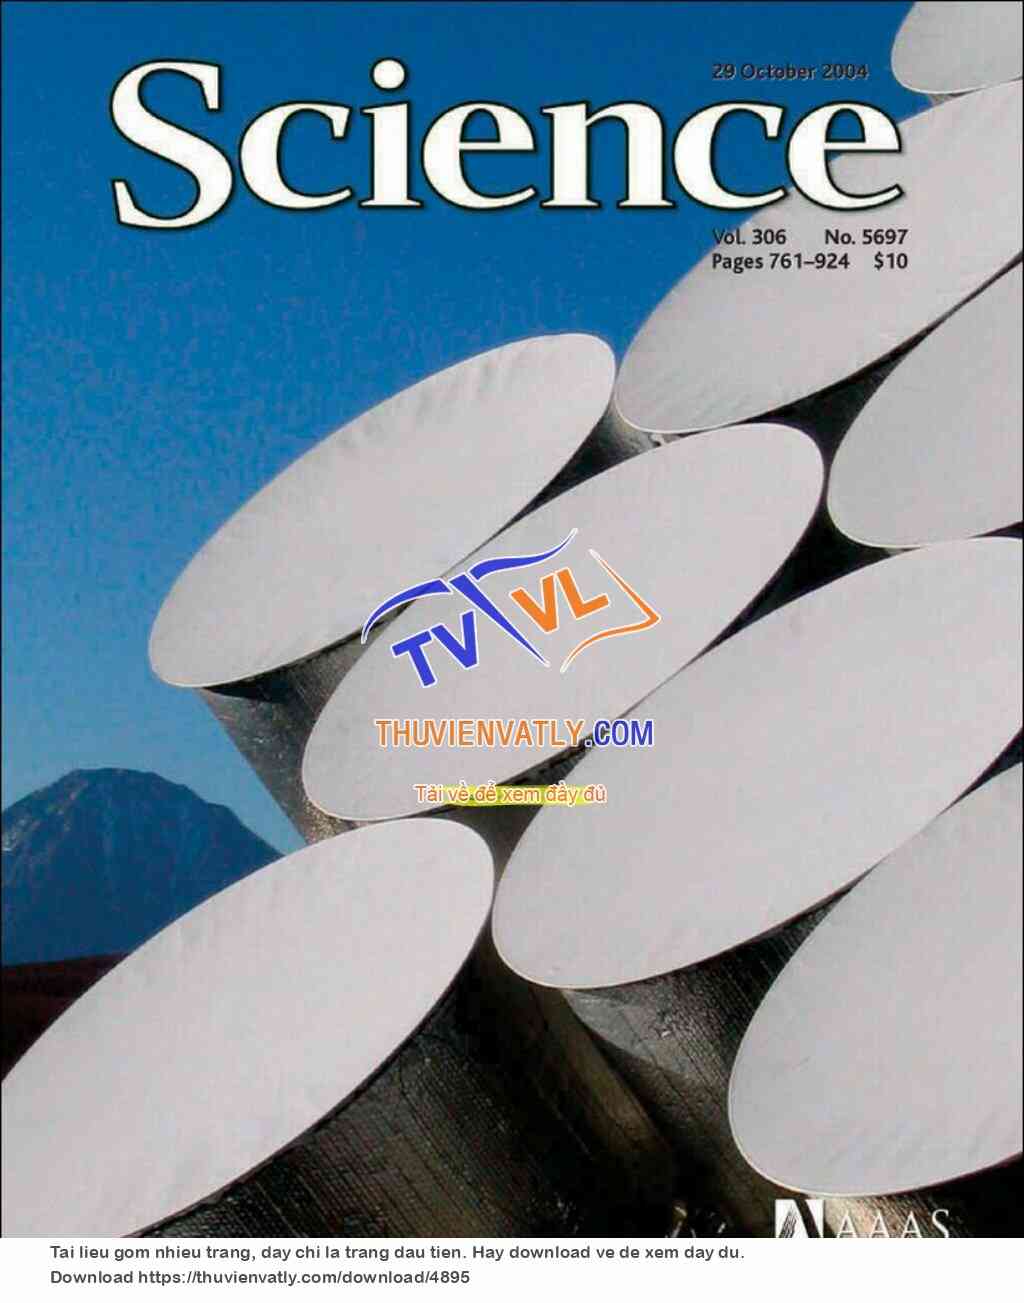 Science Magazine_29-10-2004